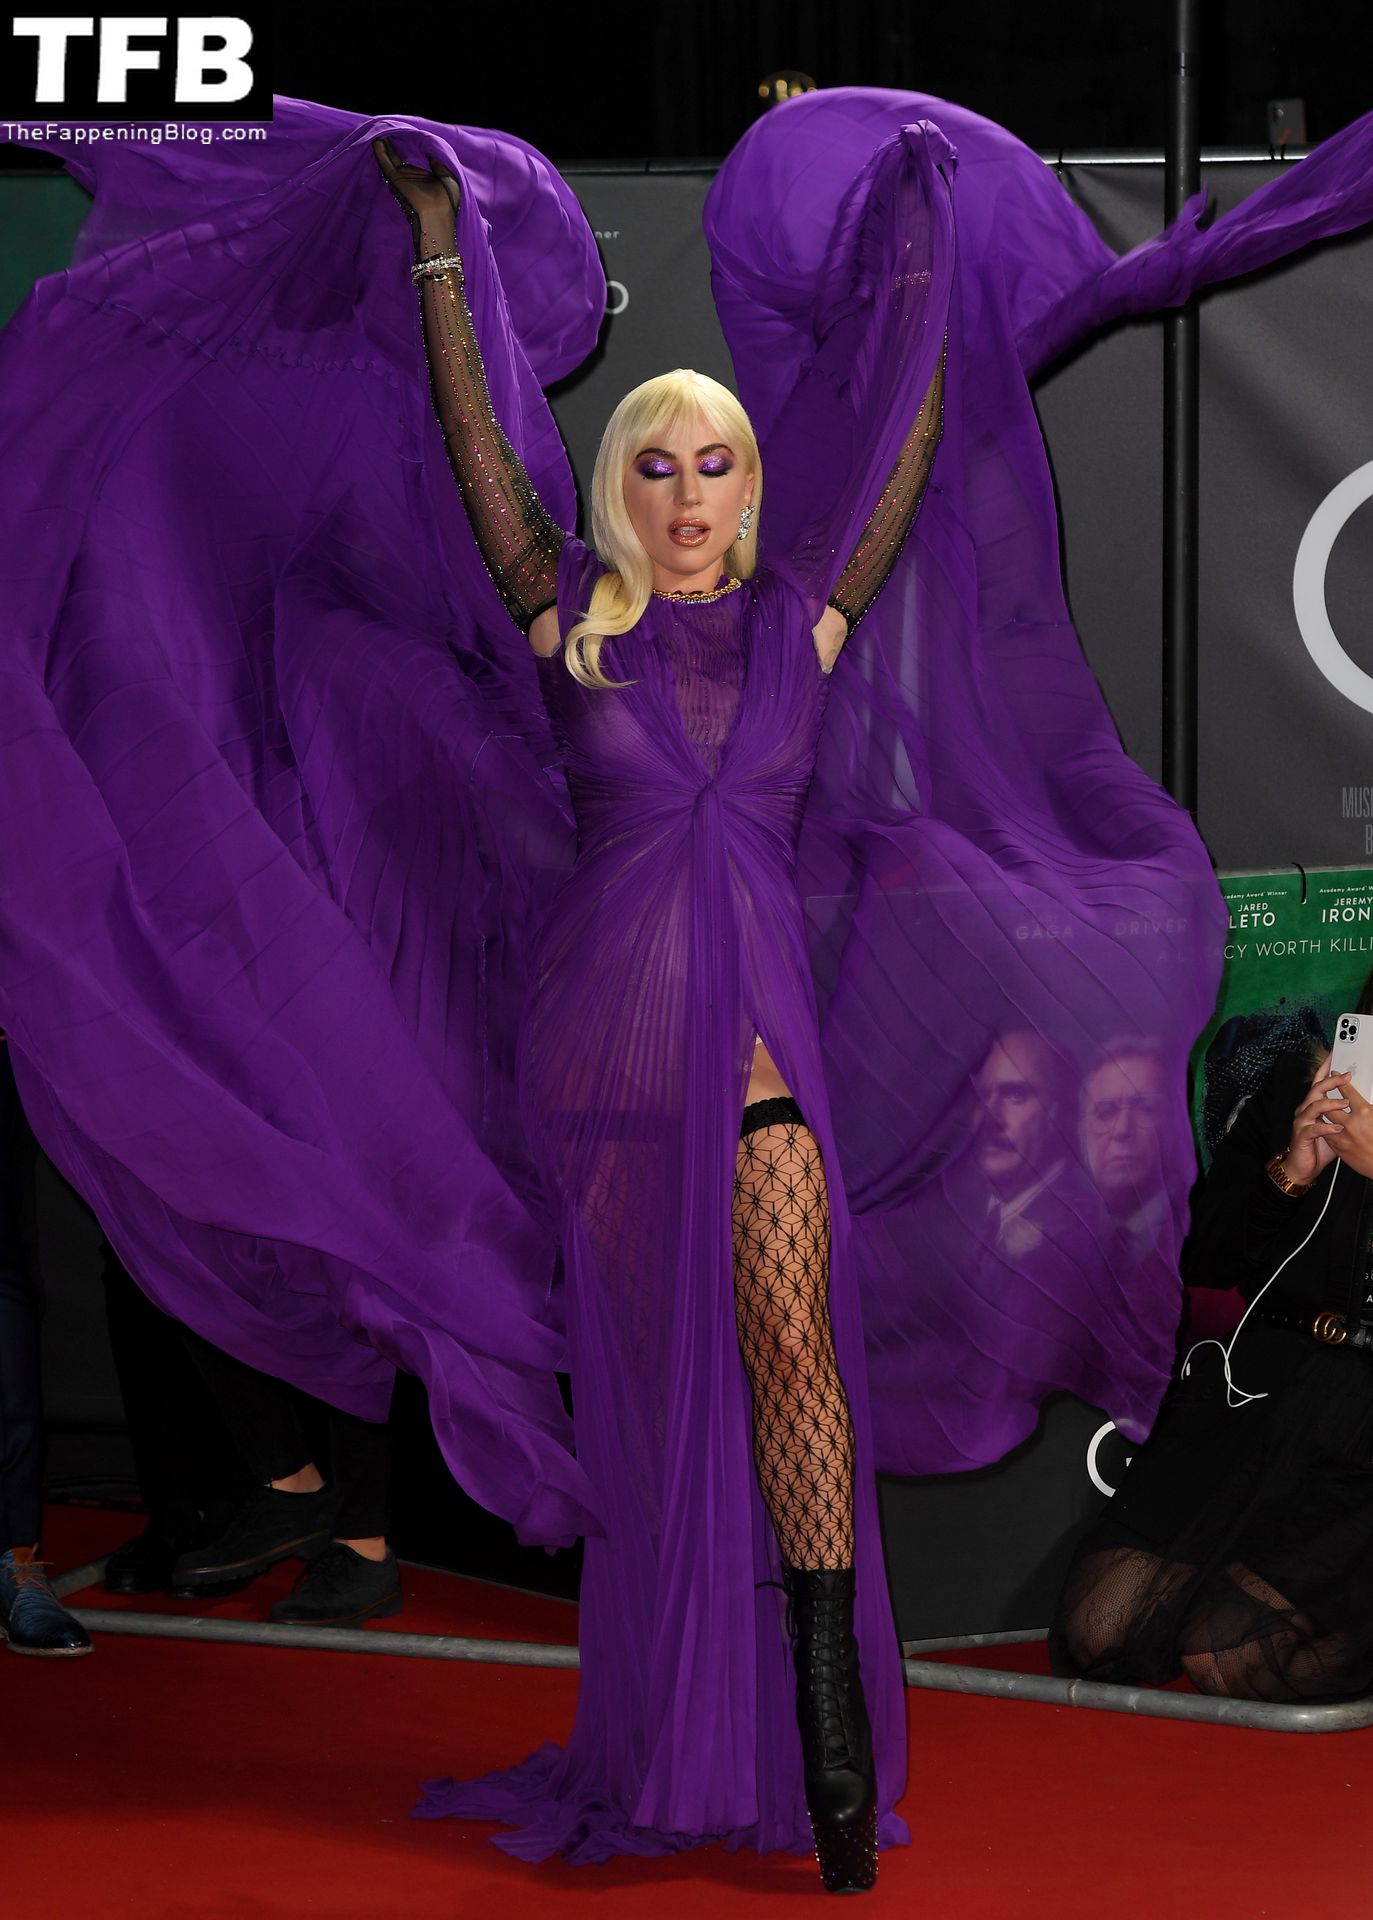 Lady-Gaga-Sexy-The-Fappening-Blog-102.jpg